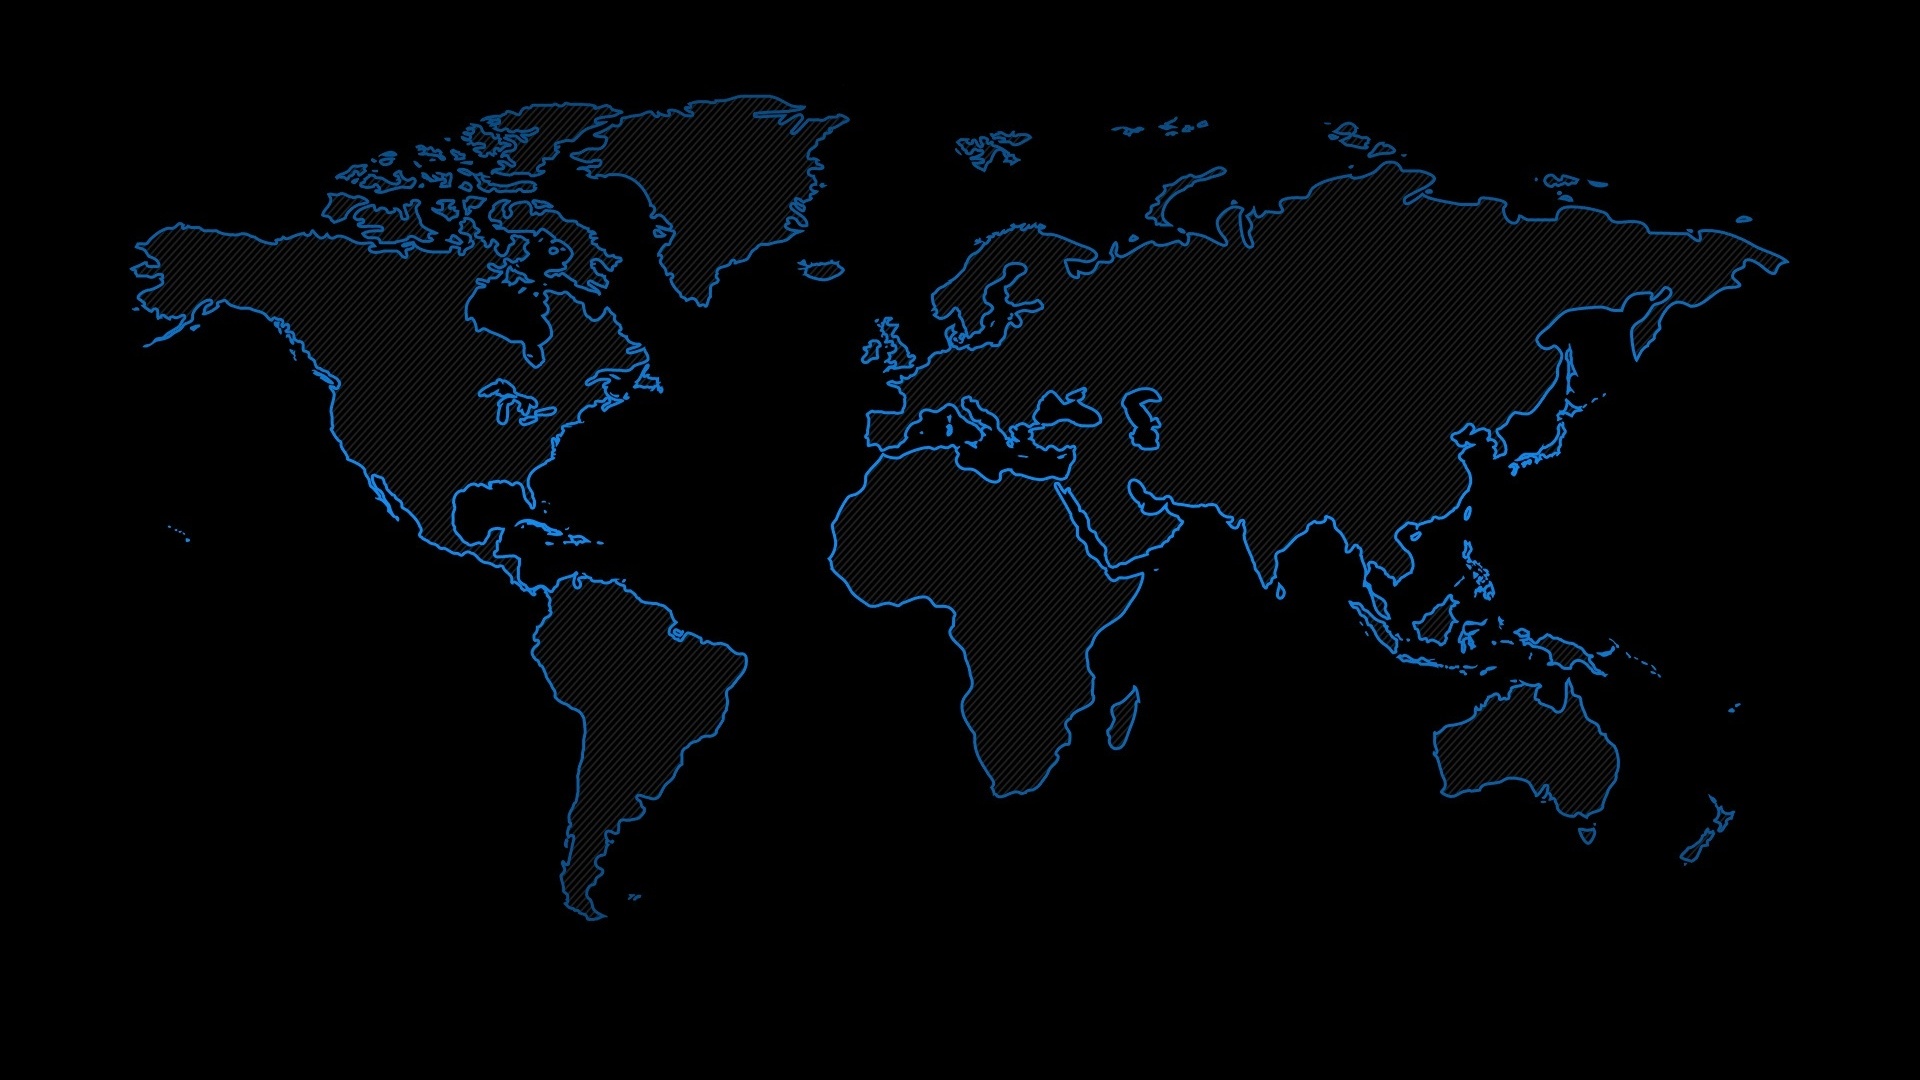 Simple Background Black Background Minimalism Digital Art Map World Map Continents Stripes 1920x1080